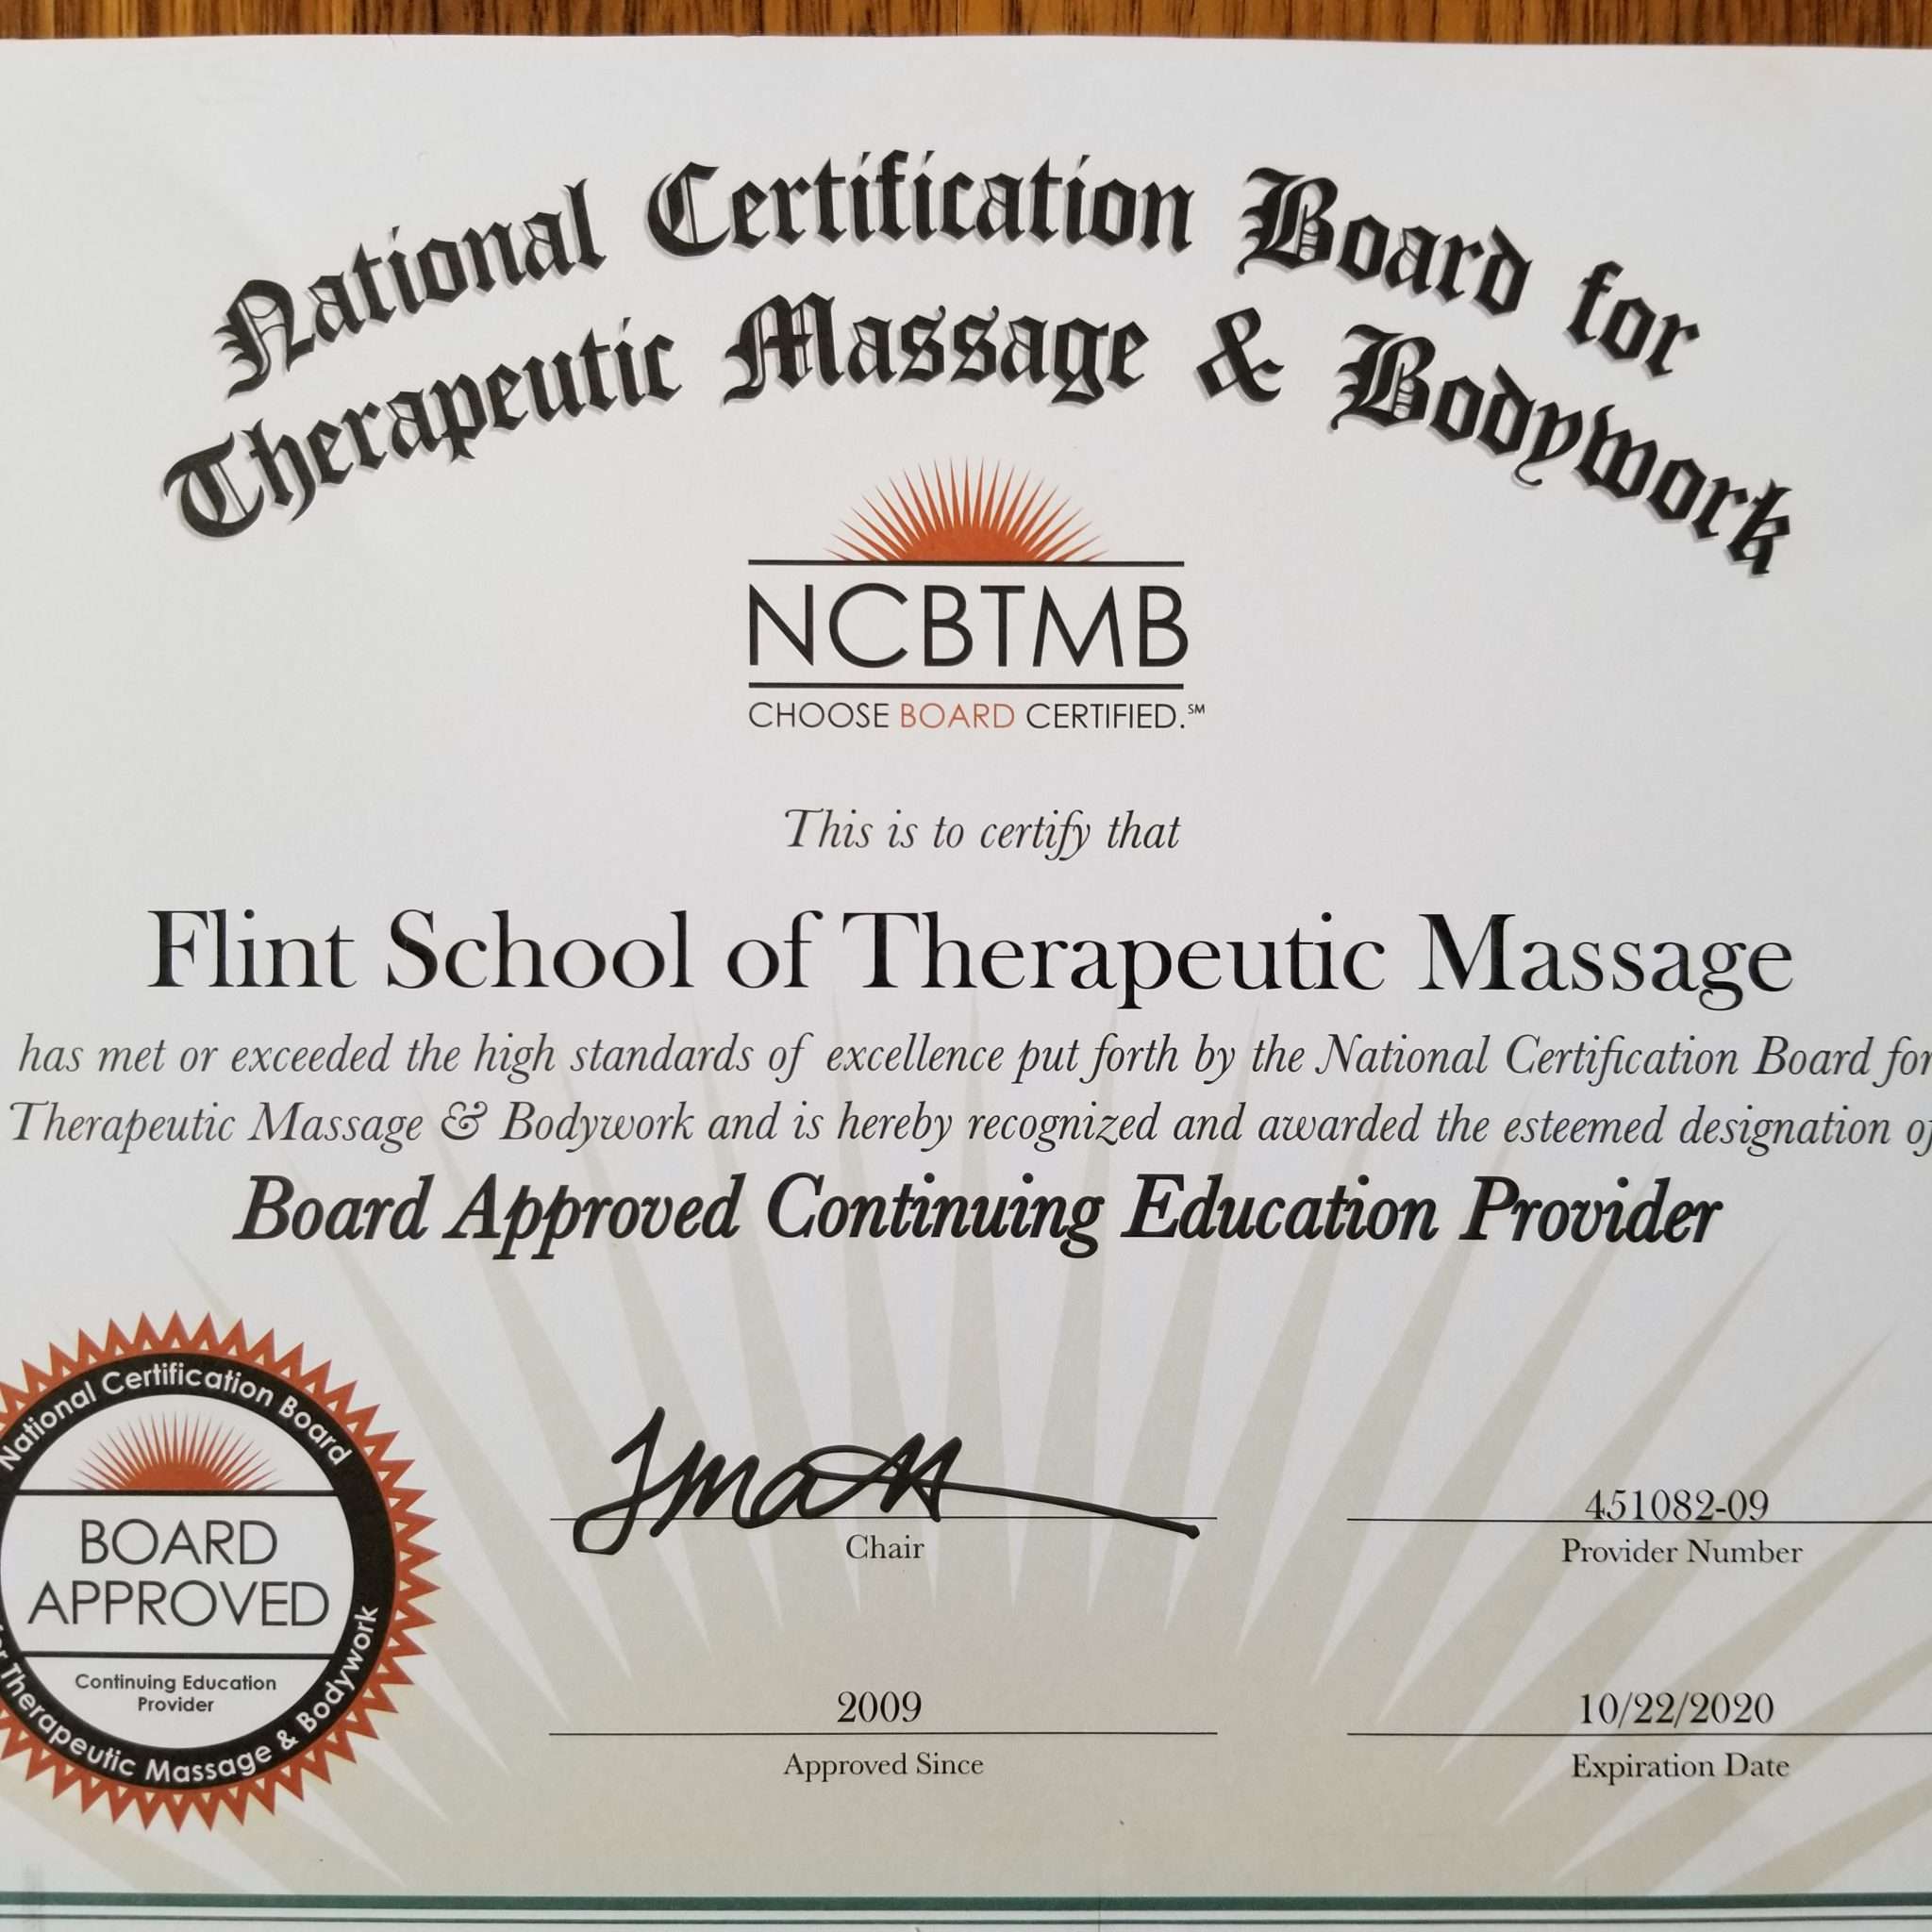 About â Flint School of Therapeutic Massage